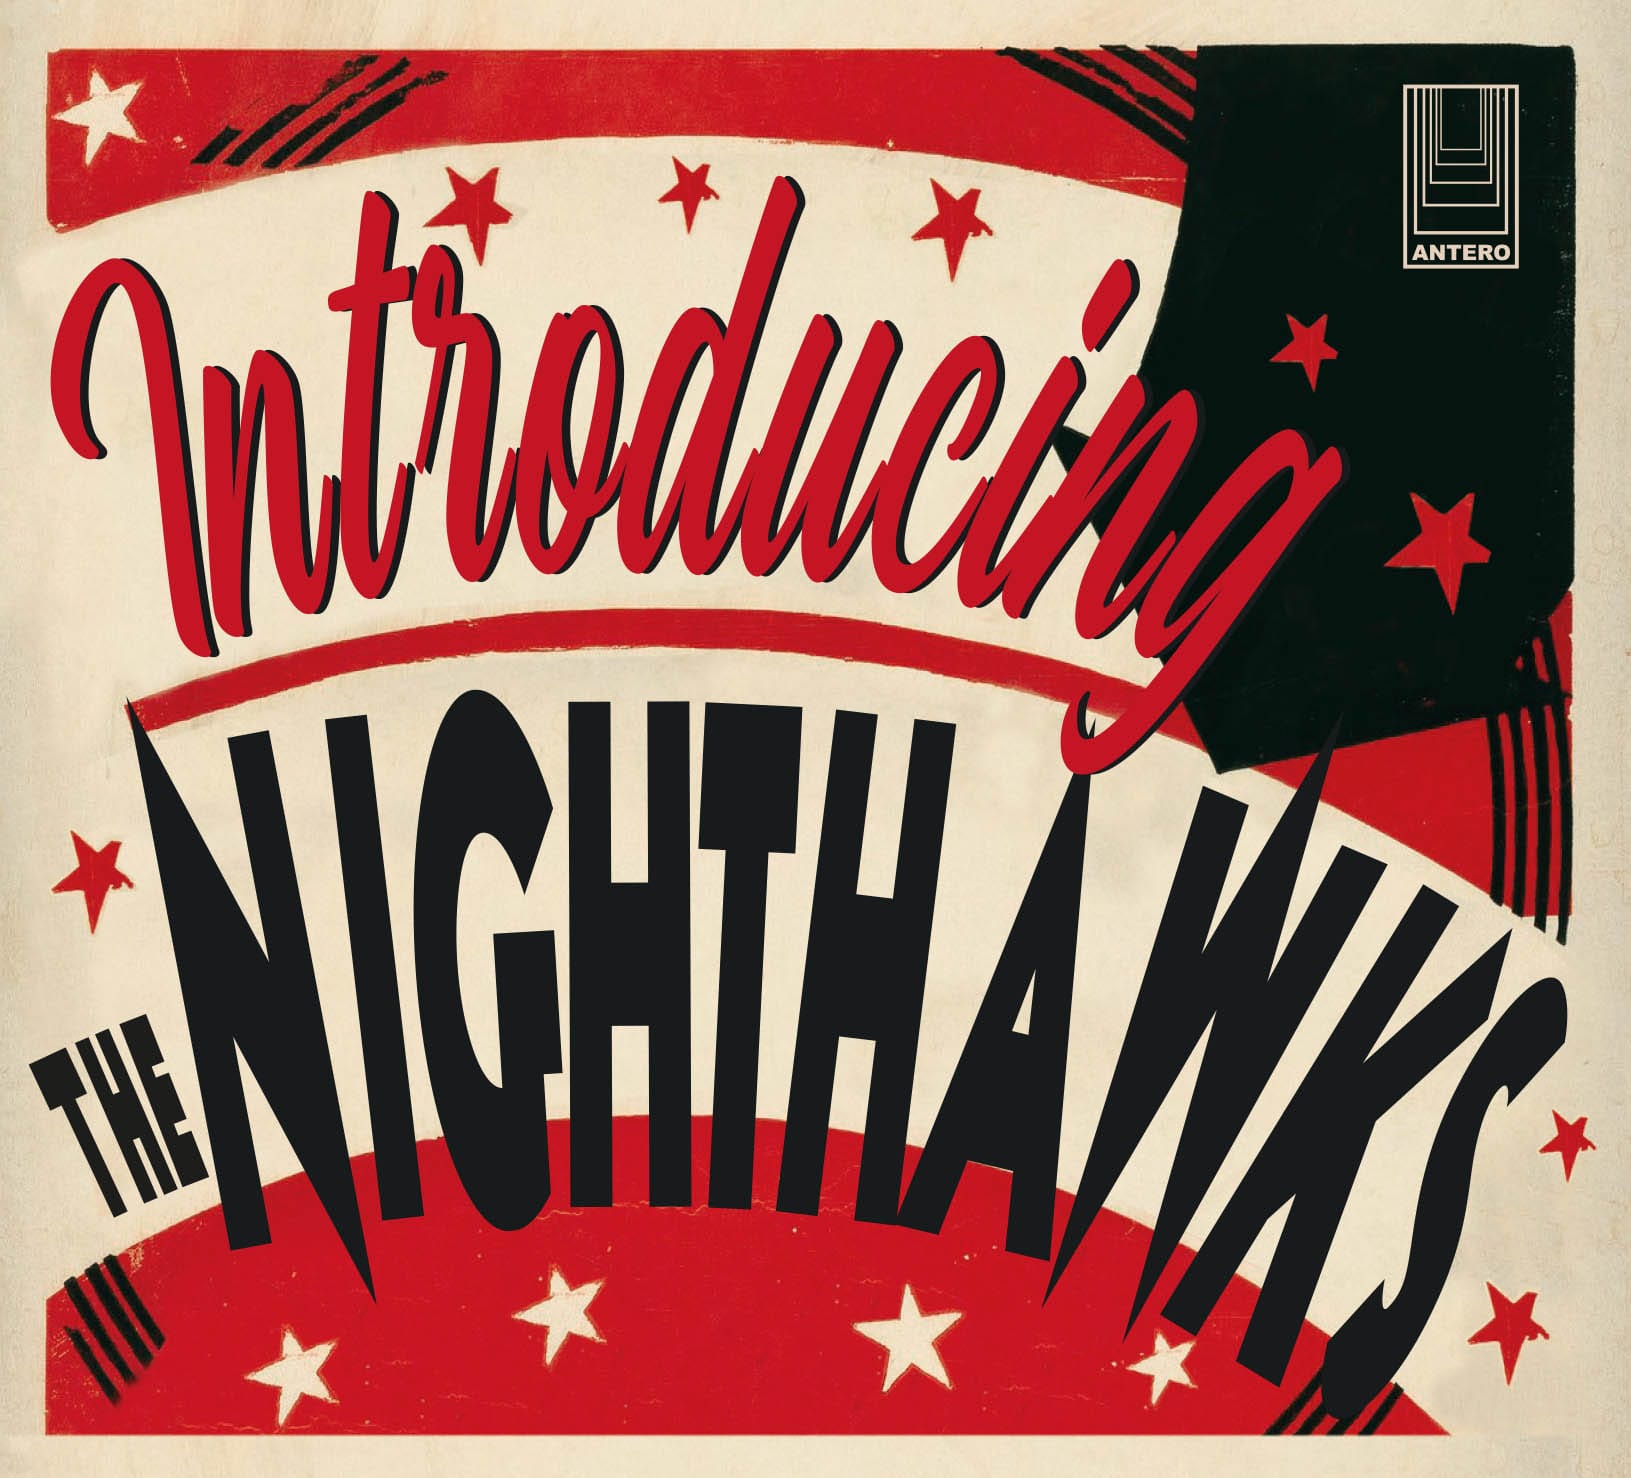 Introducing The Nighthawks